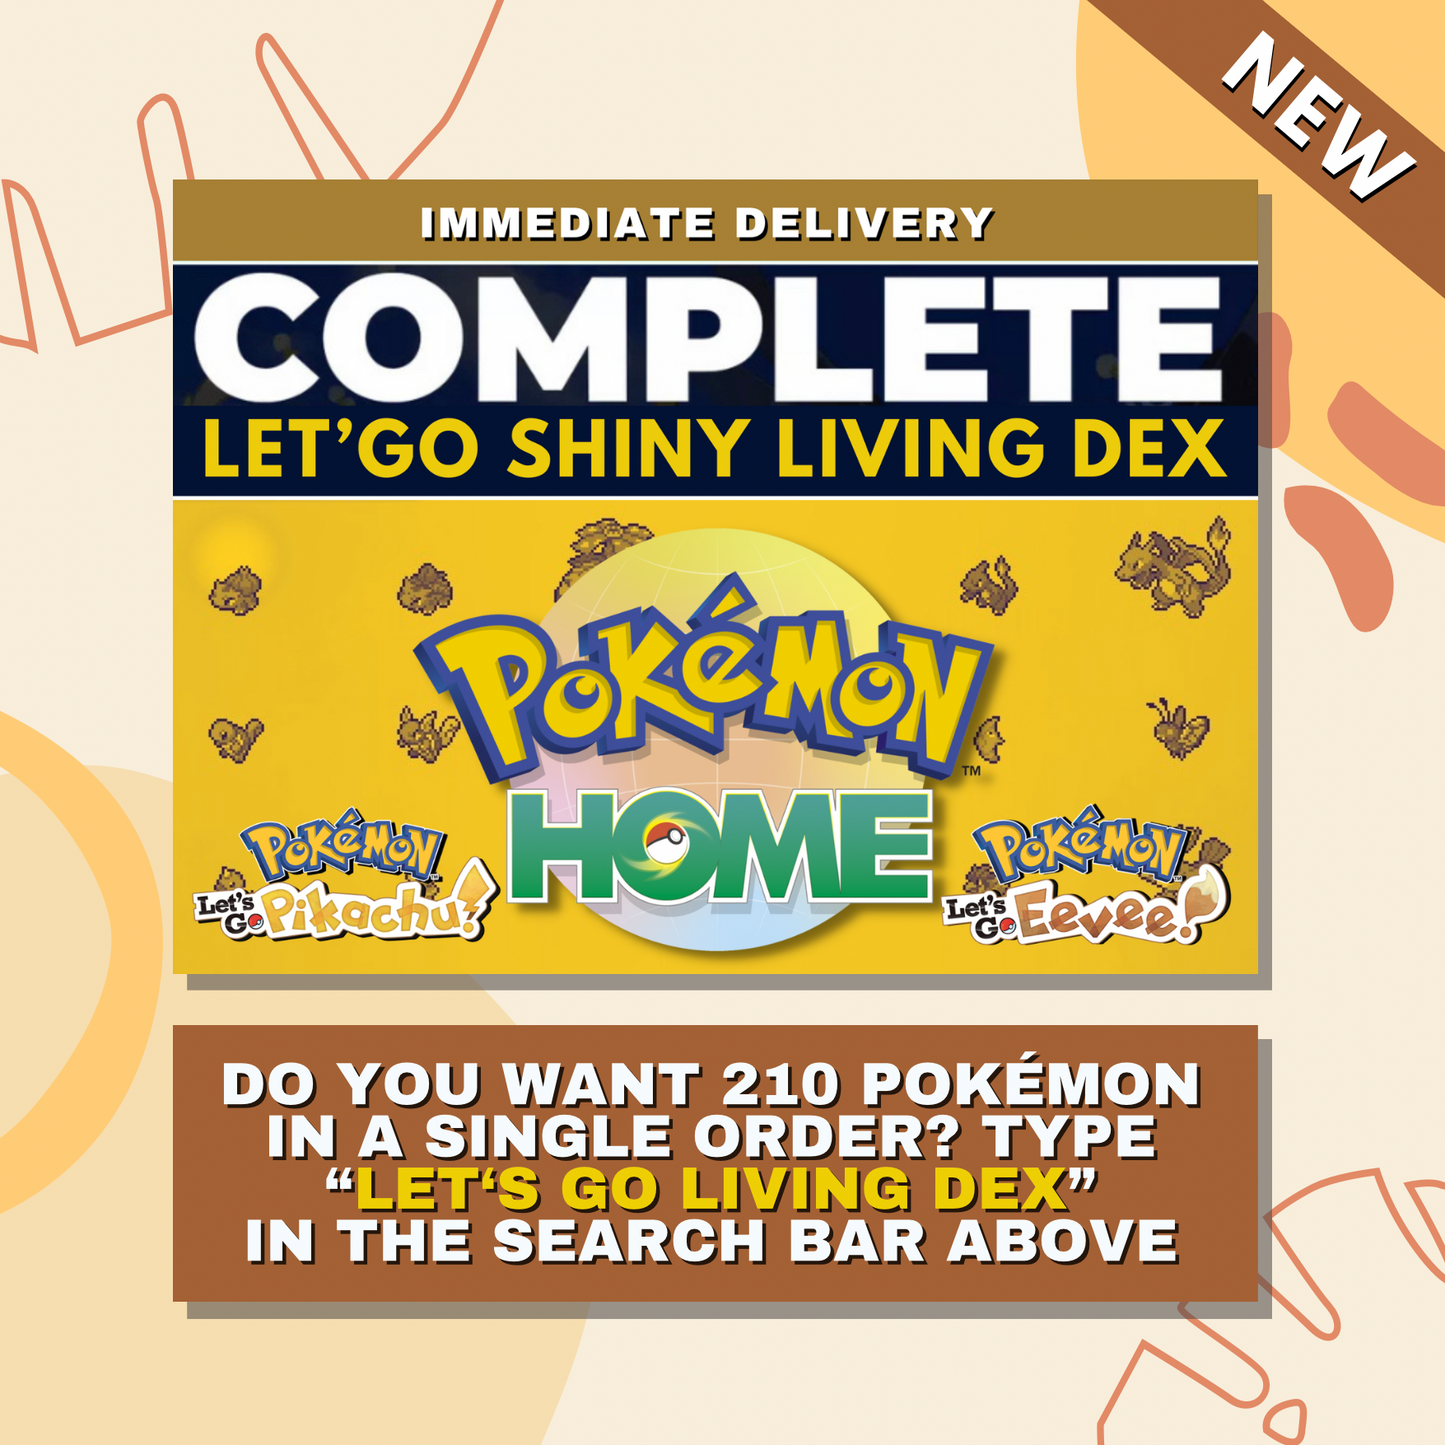 Mega Blastoise Shiny ✨ or Non Shiny Pokémon Let's Go Pikachu Eevee Level 100 Competitive Battle Ready 6 IV 100% Legit Legal Customizable Custom OT by Shiny Living Dex | Shiny Living Dex